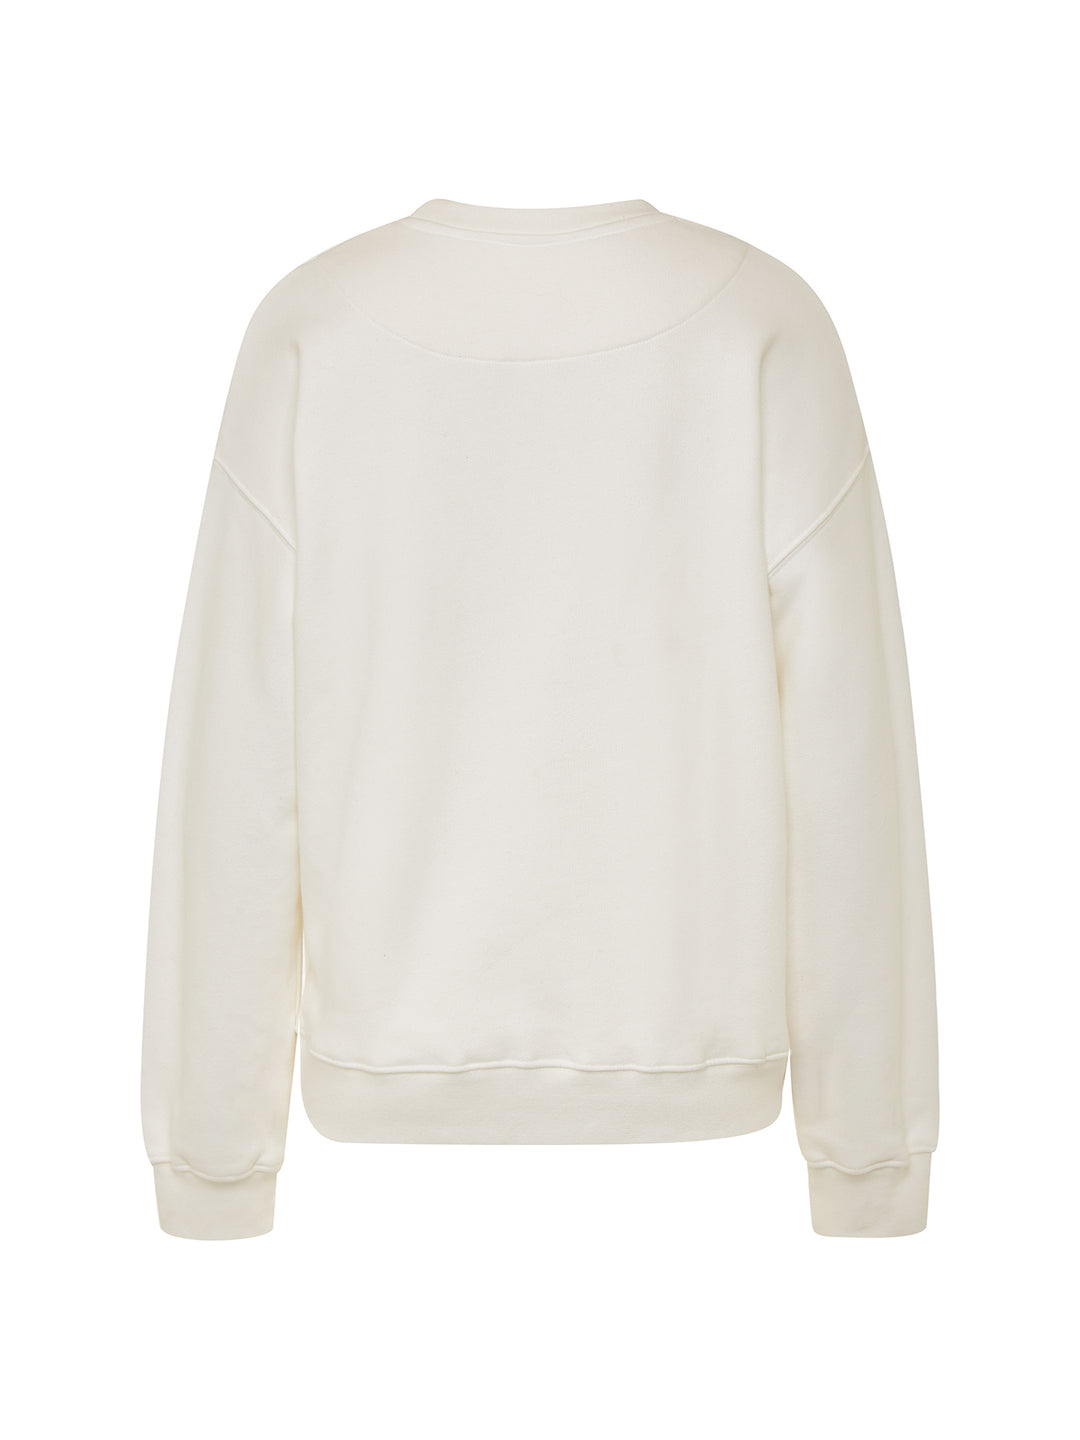 ELENA - Sweatshirt, Off-White